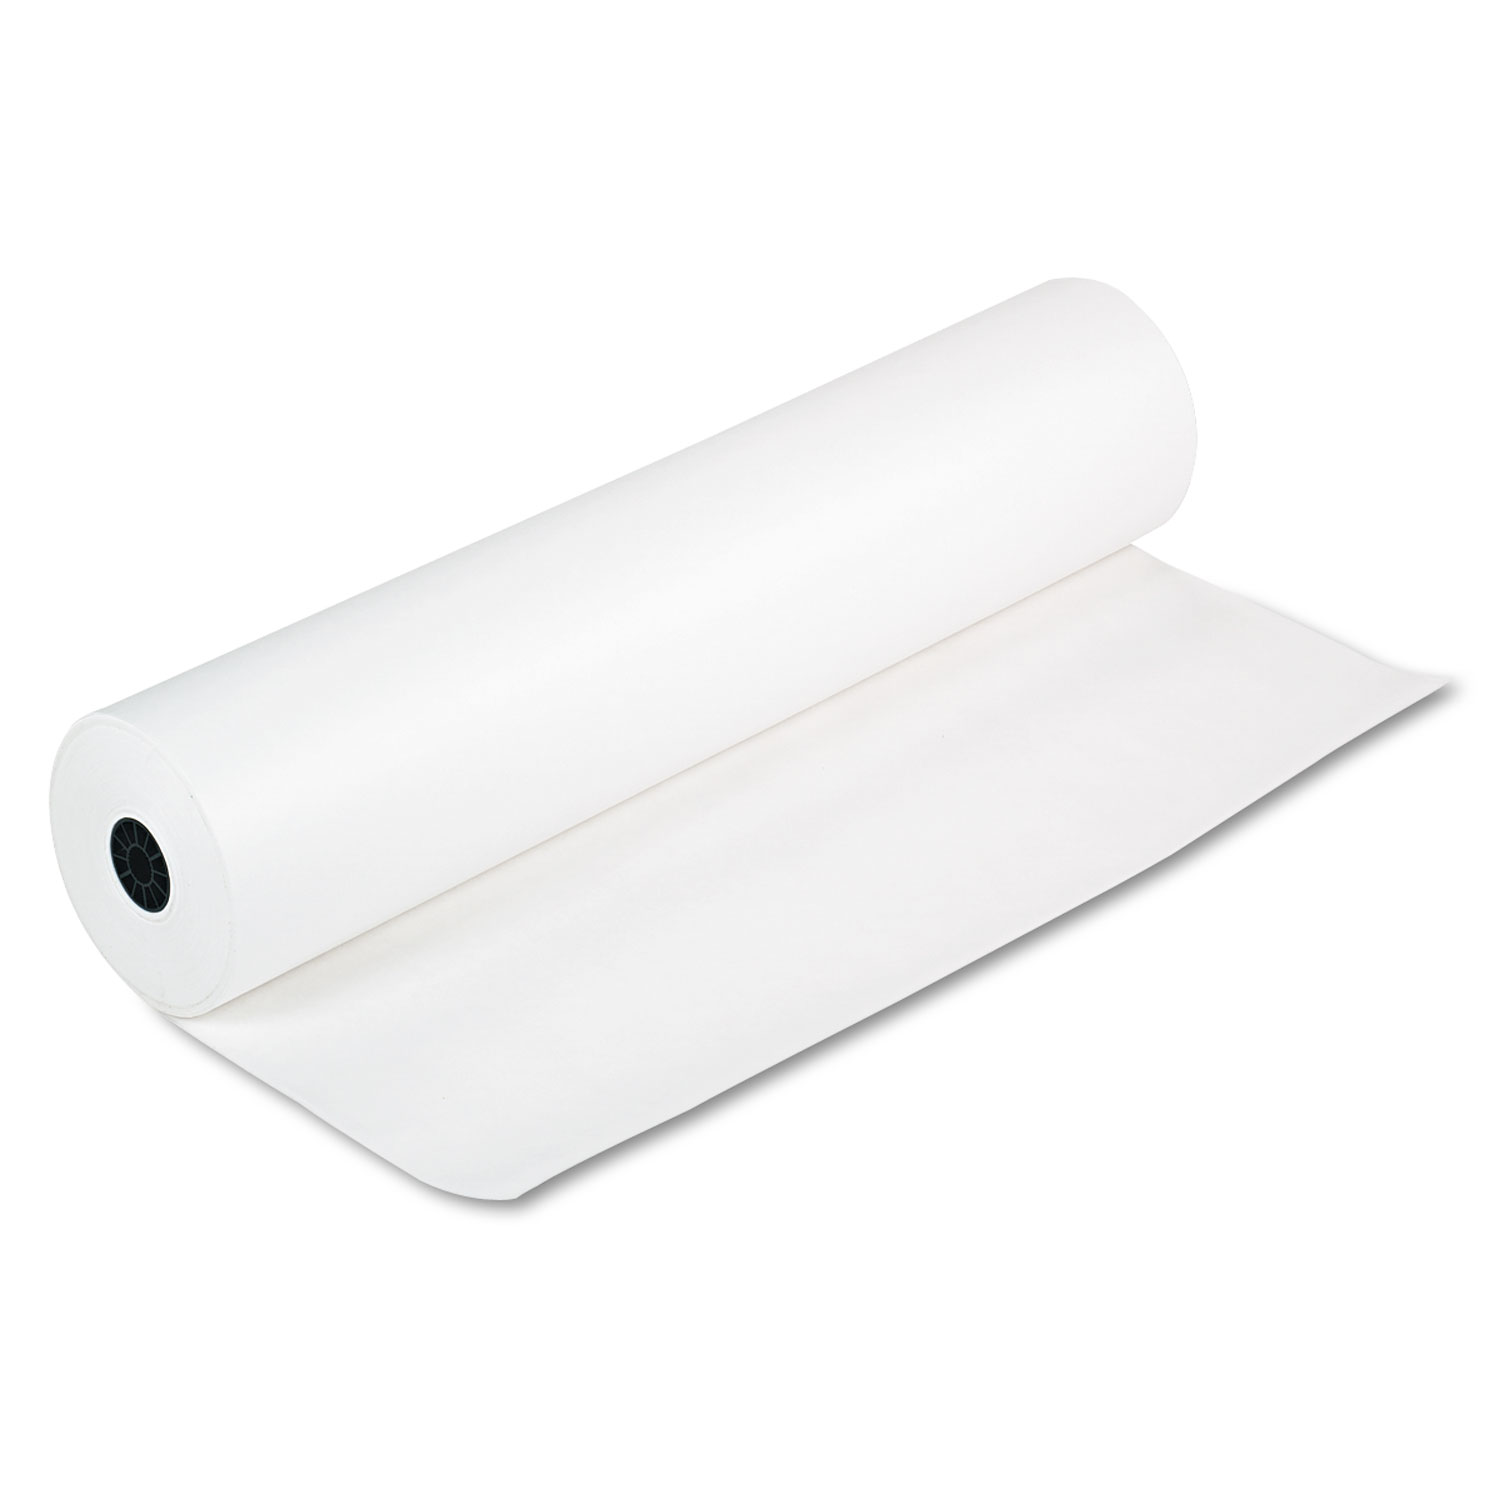 Spectra ArtKraft Duo-Finish Paper, 48 lbs., 36 x 1000 ft, White